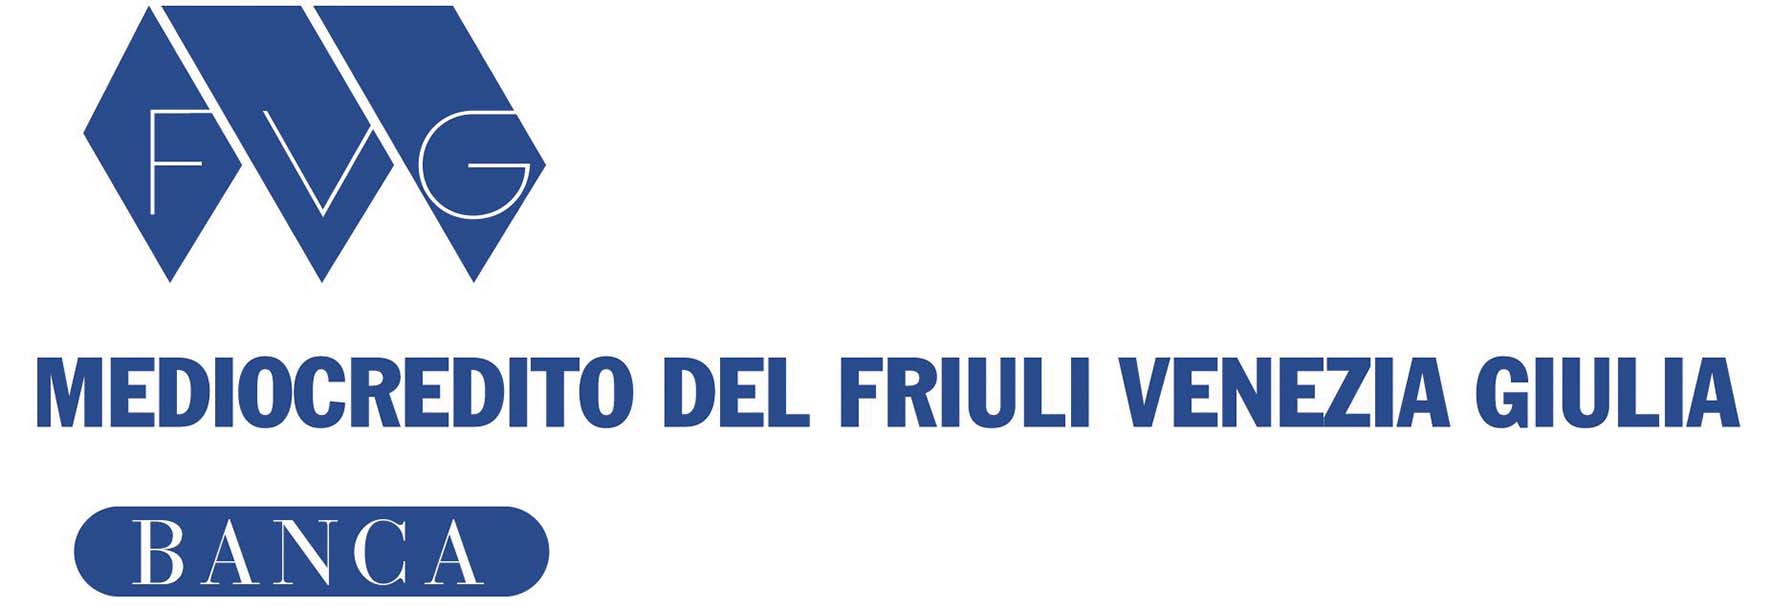 MEDIOCREDITO FVG logo